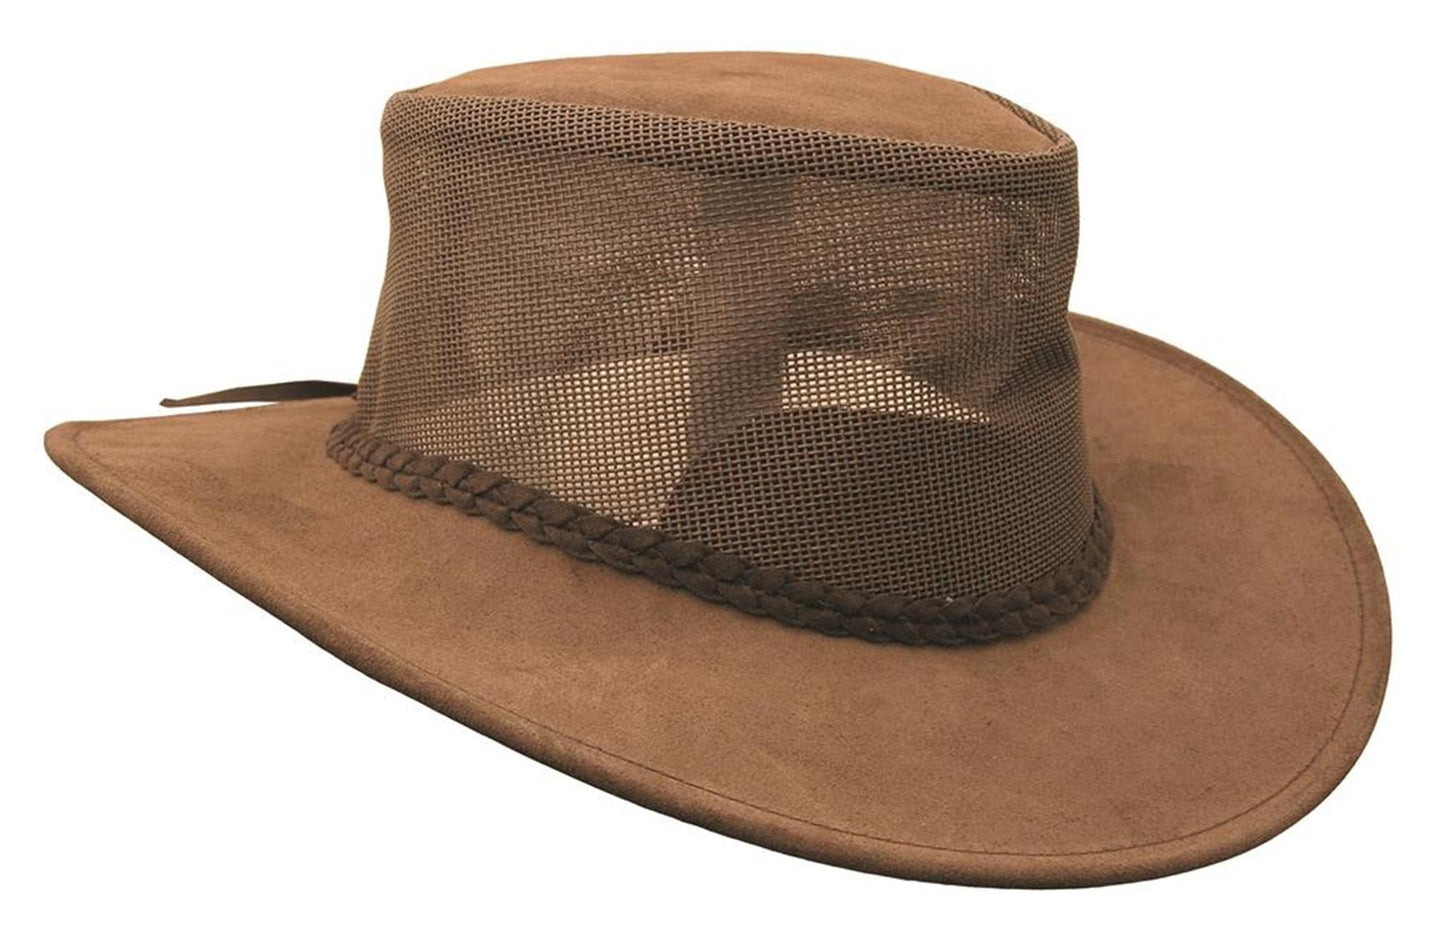 Outdoor summer hat made of suede in black bendigo with a net block